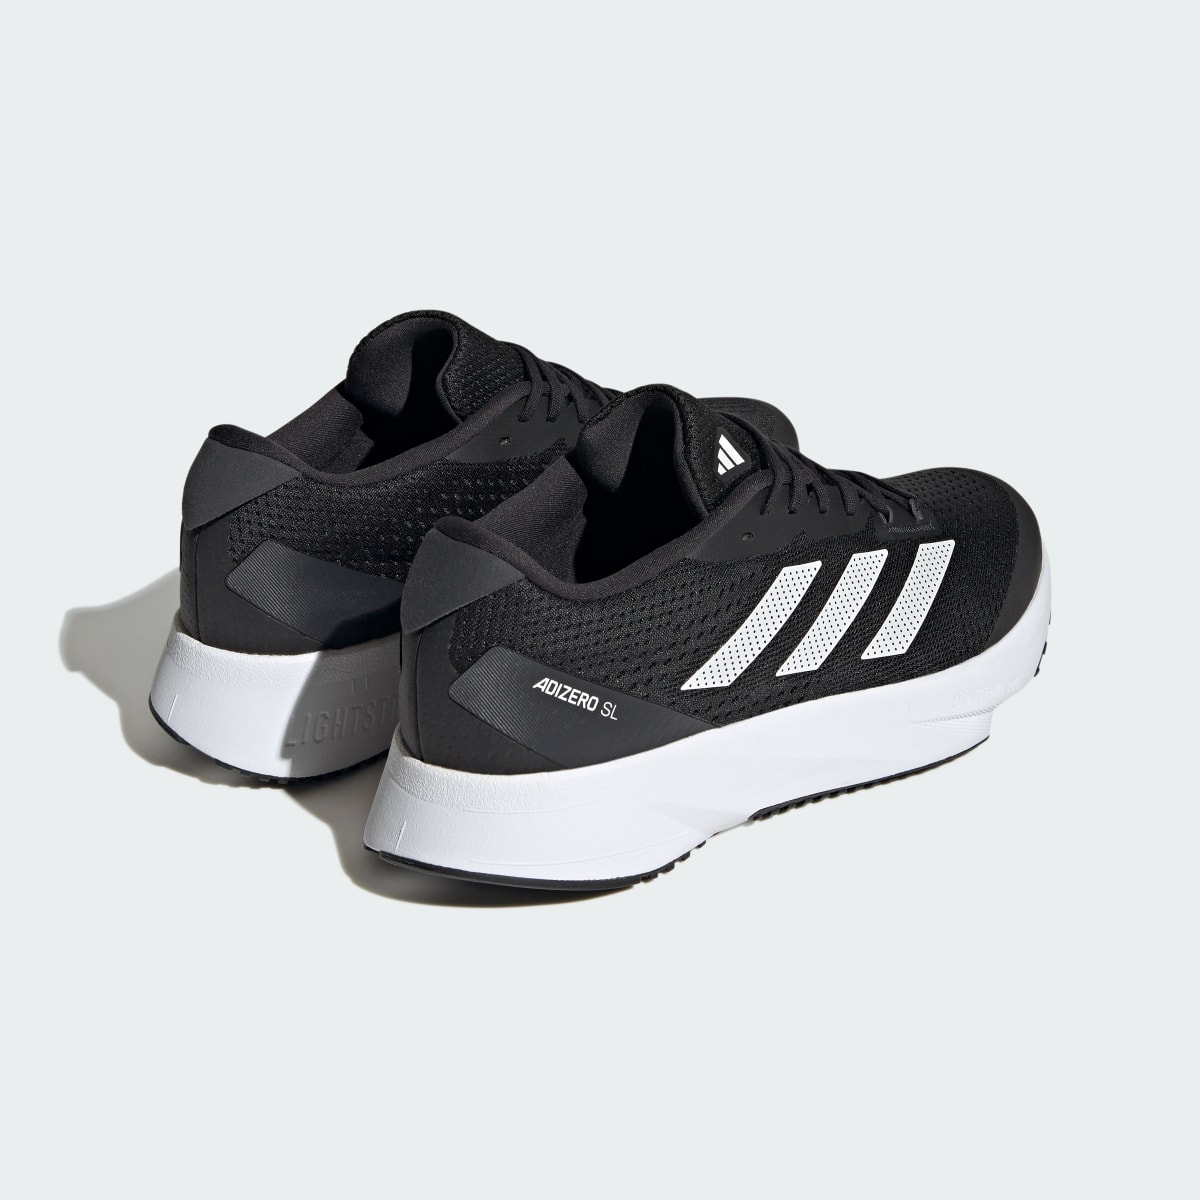 Adidas Adizero SL Wide Lightstrike Running Shoes. 6